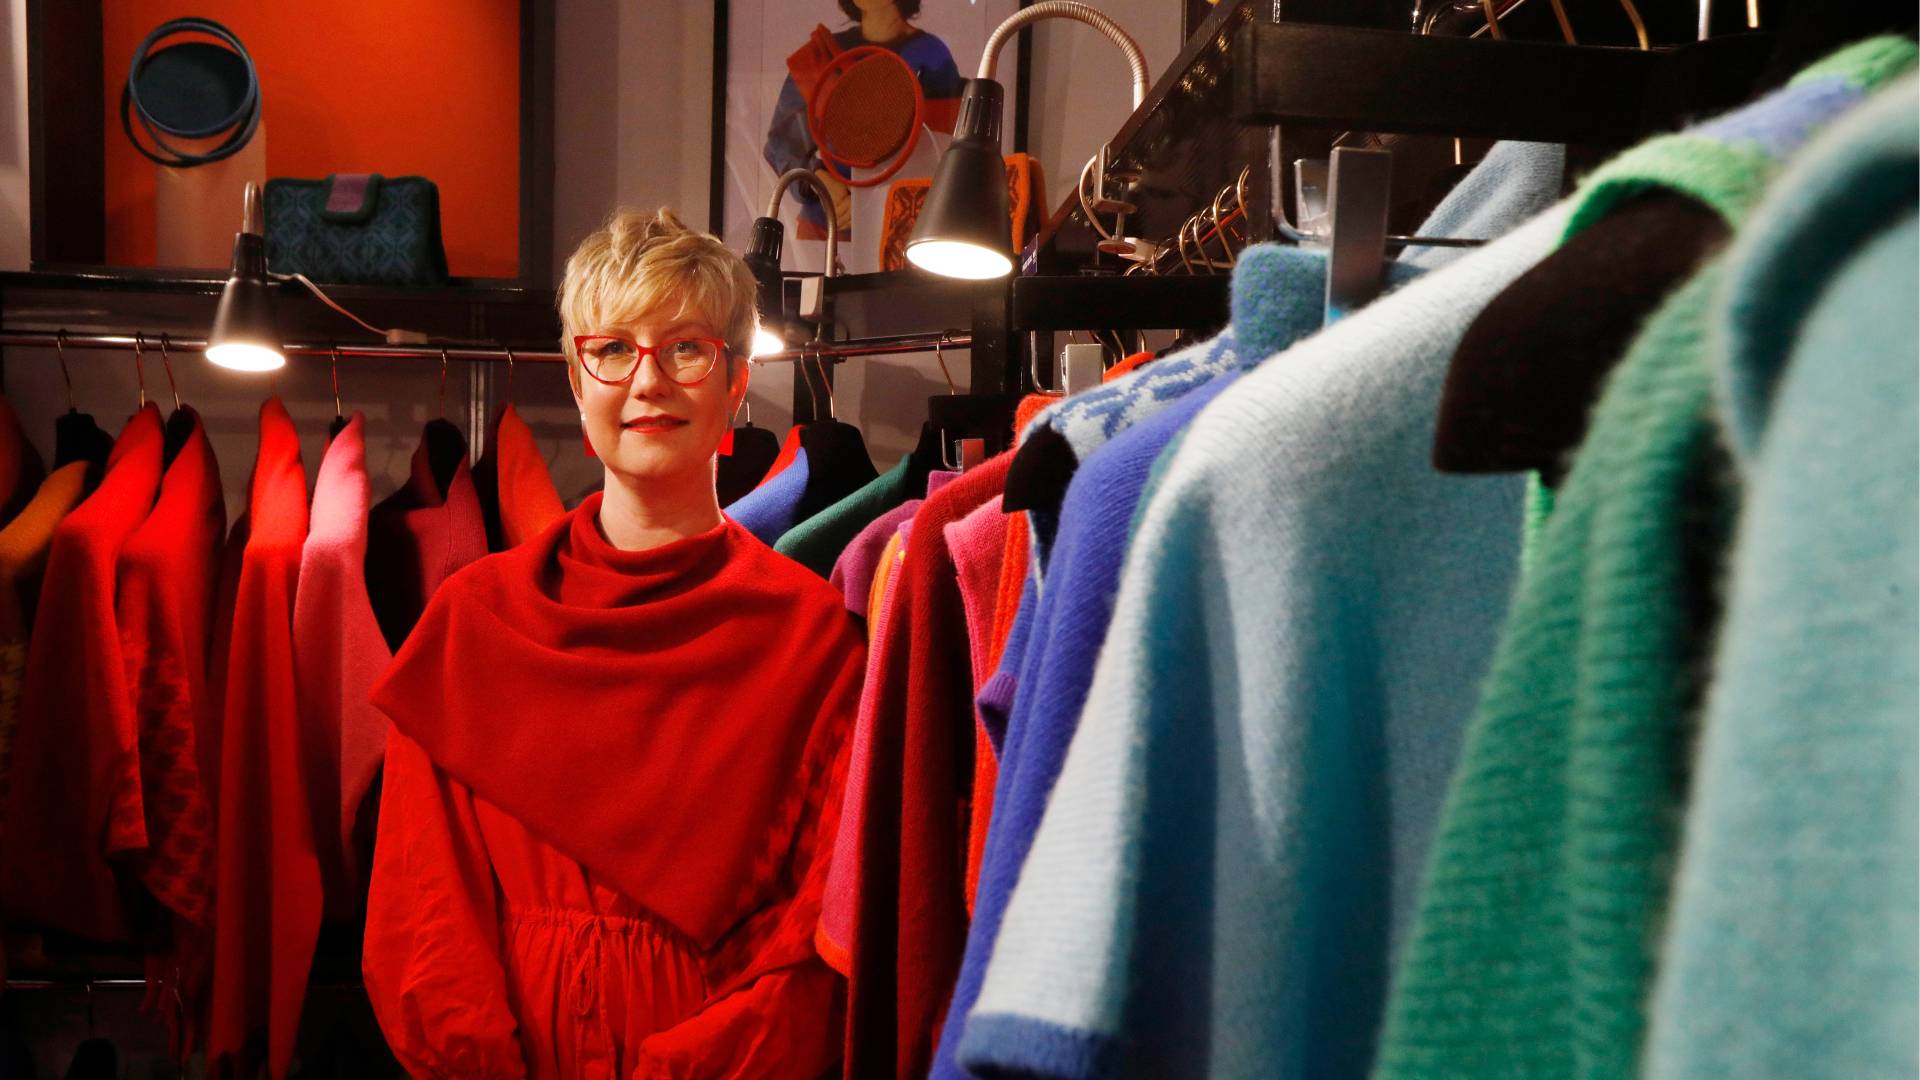 Designer Michelle McCarroll stands among her knitwear